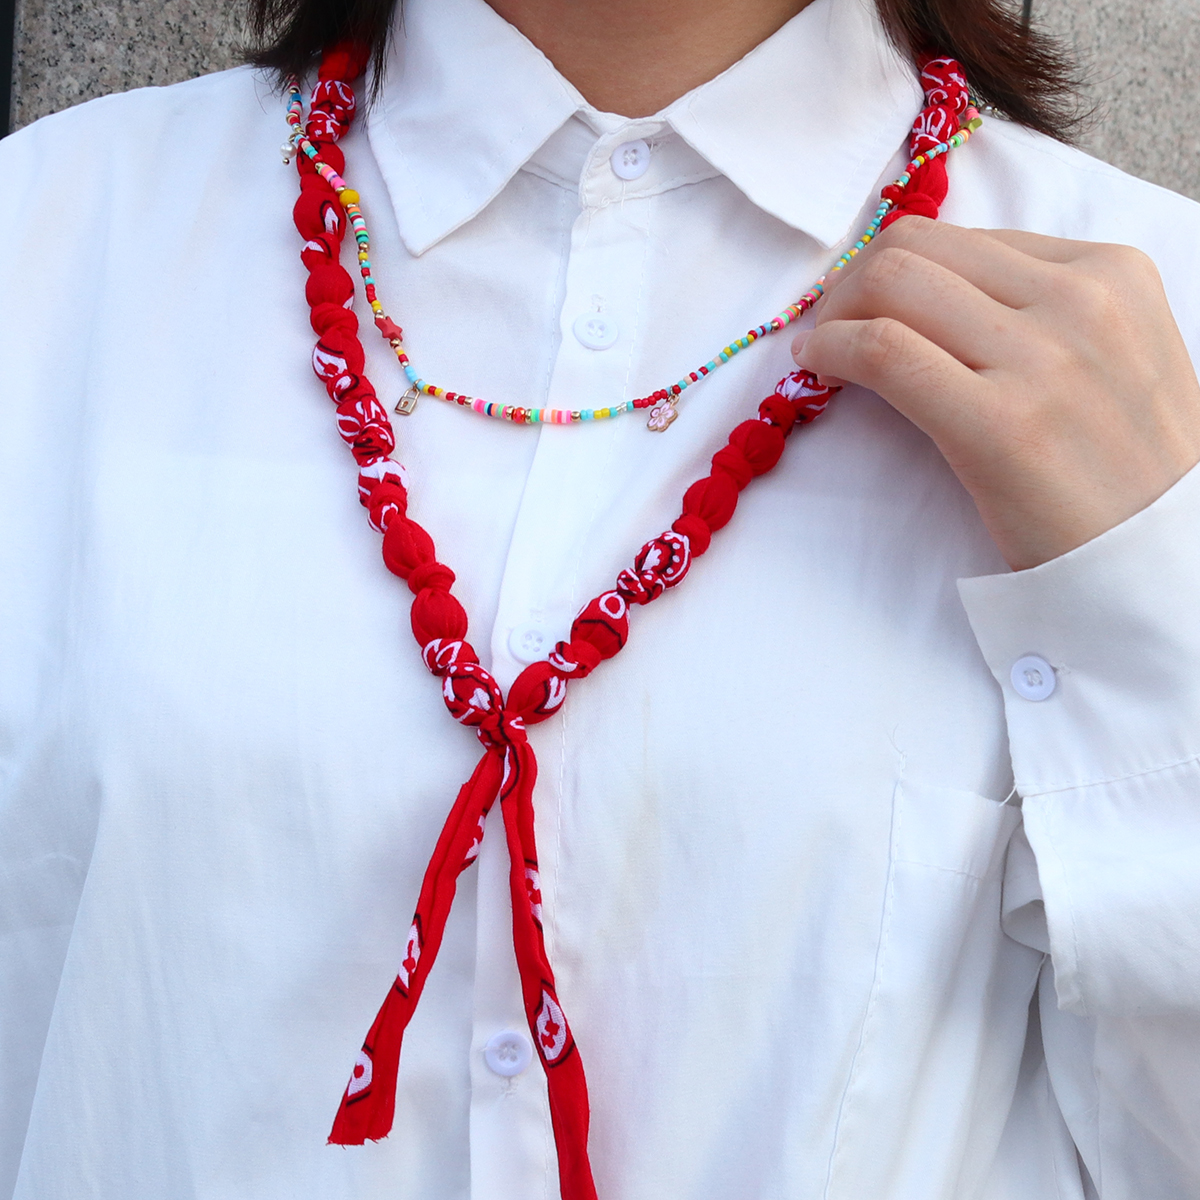 AENSOA Bohemia Colorful Printing Fabric Acrylic Beaded Bandana Necklaces for Women Handmade Ethnic Long Necklace Jewelry Gifts